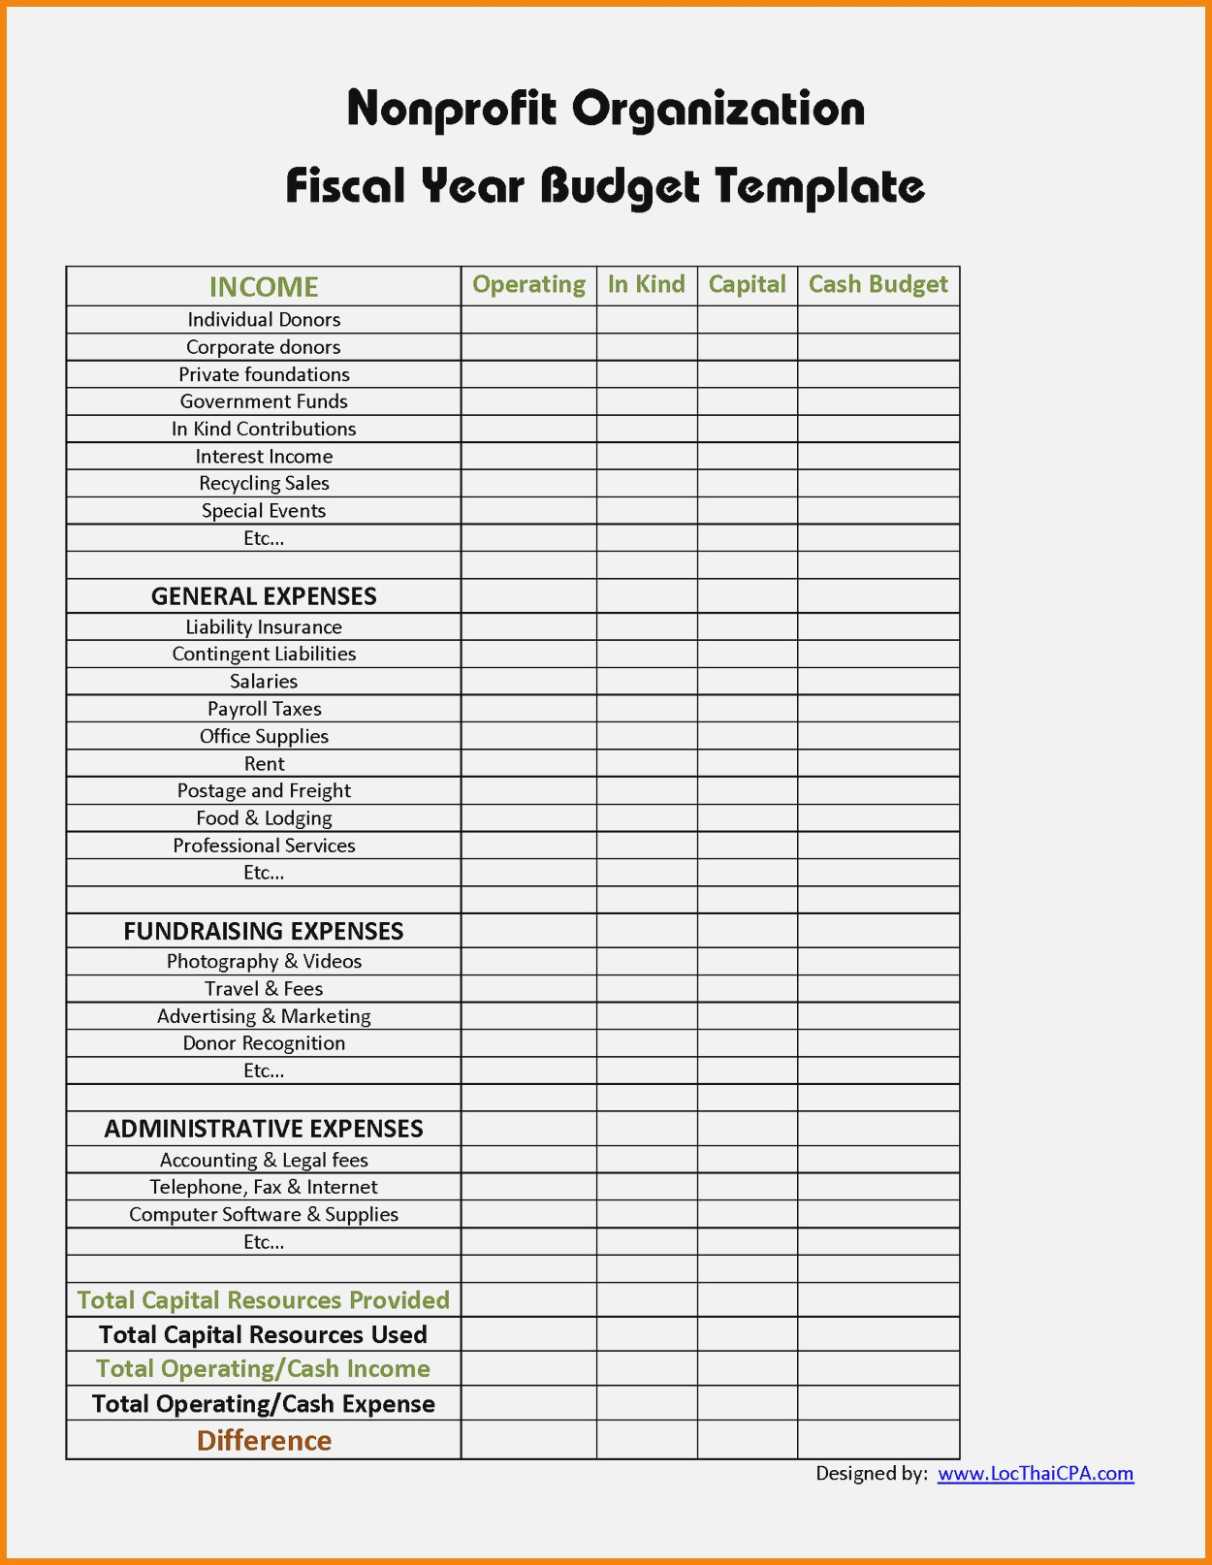 10 Treasurers Report Template | Resume Samples With Non Profit Treasurer Report Template